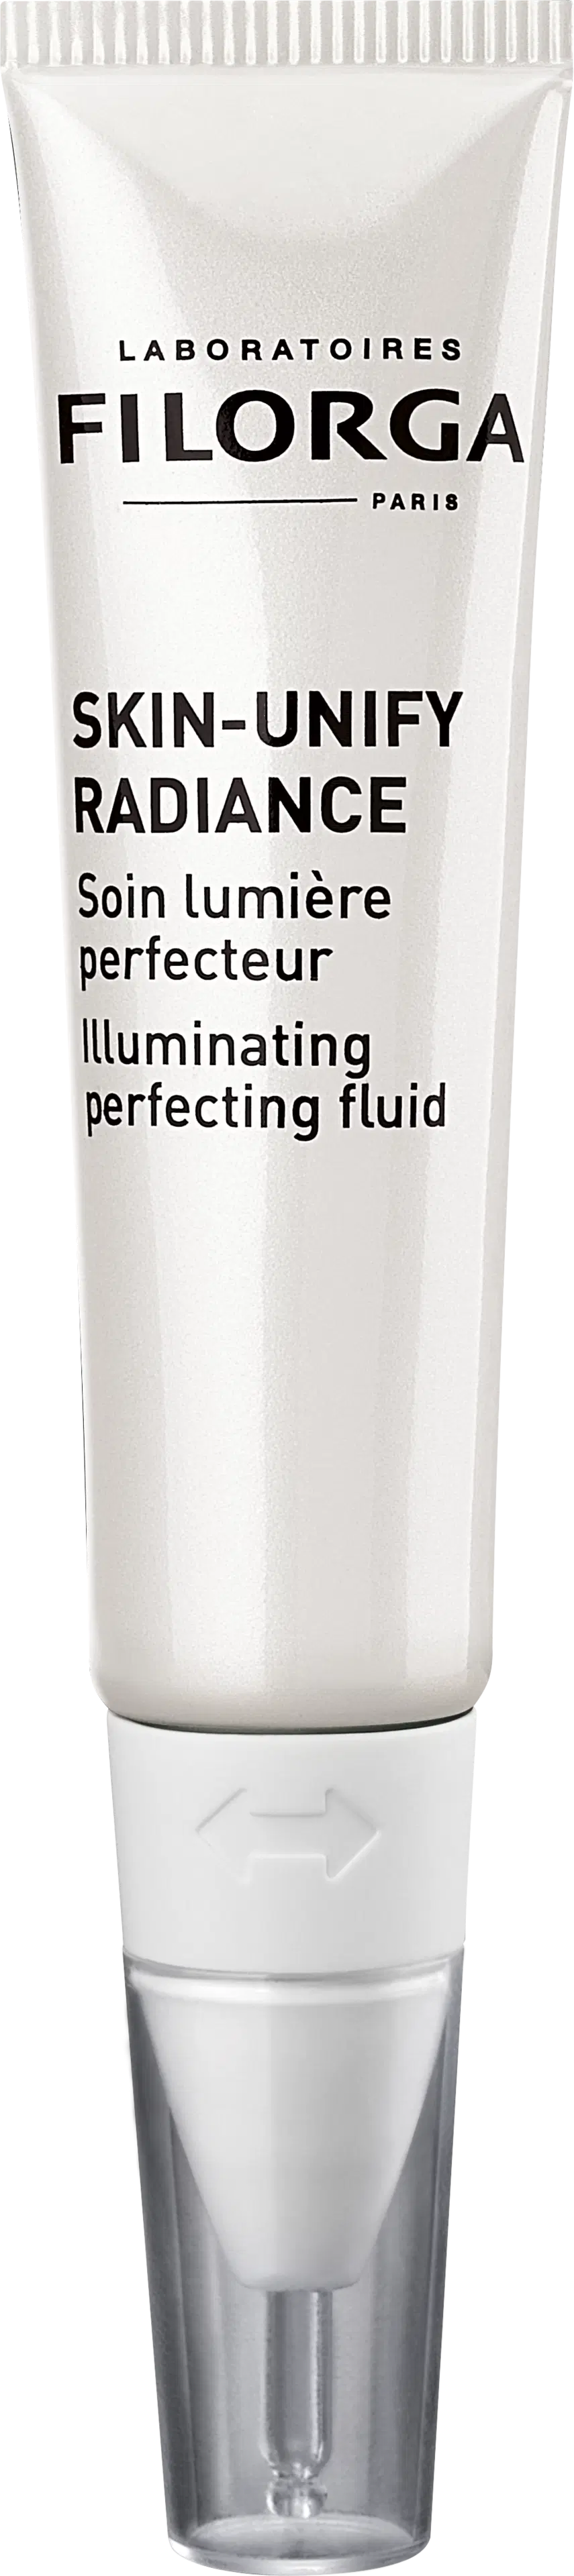 Filorga Skin-Unify Iradiance Booster Fluid emulsio 15 ml